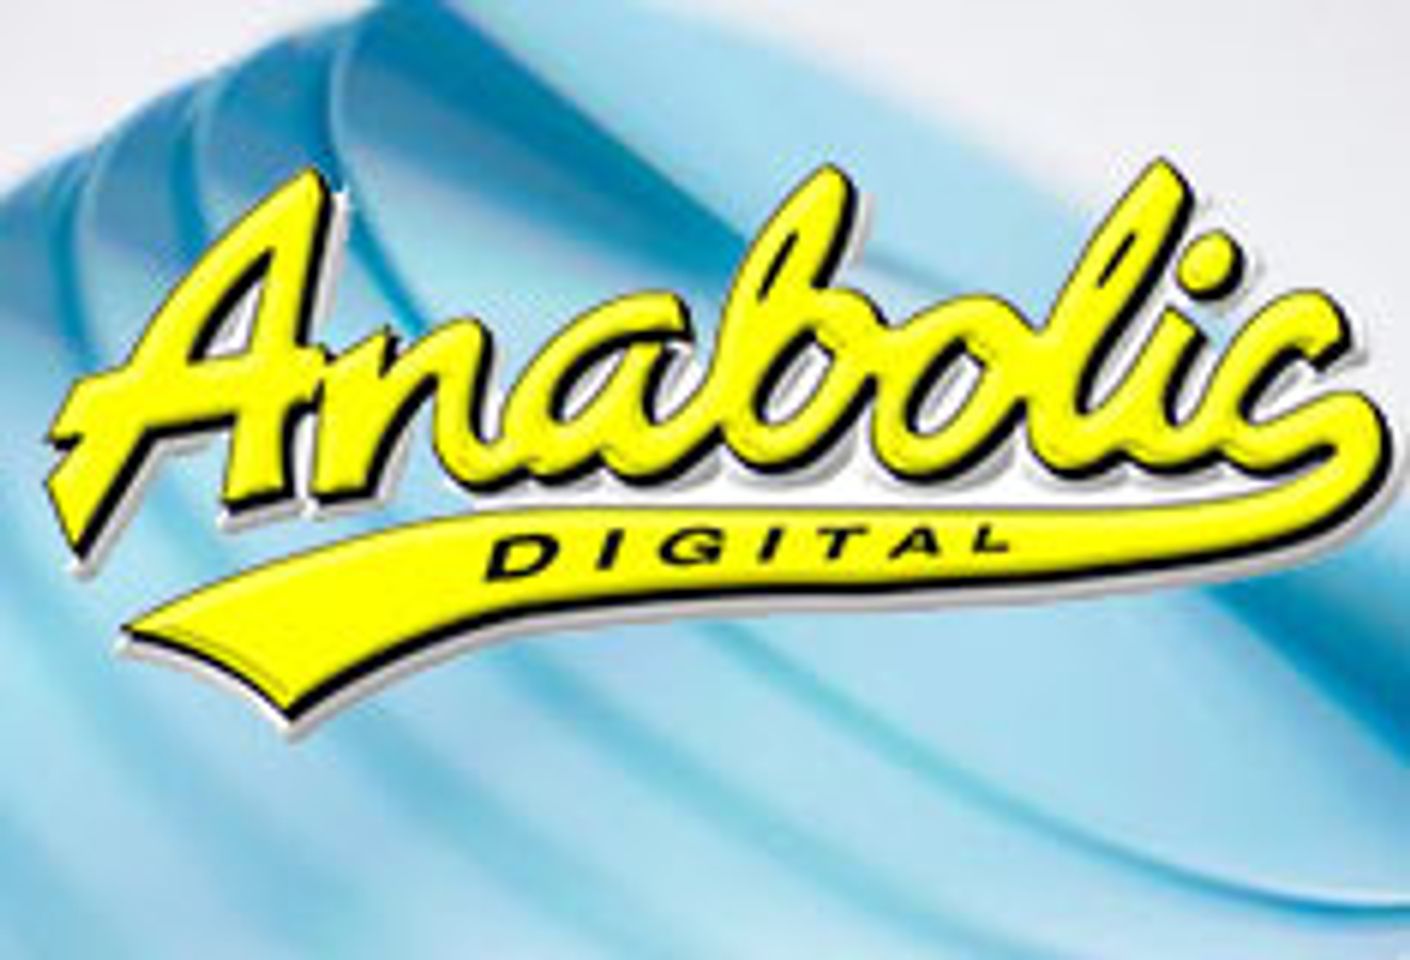 Anabolic Penetrates Blu-ray Platform